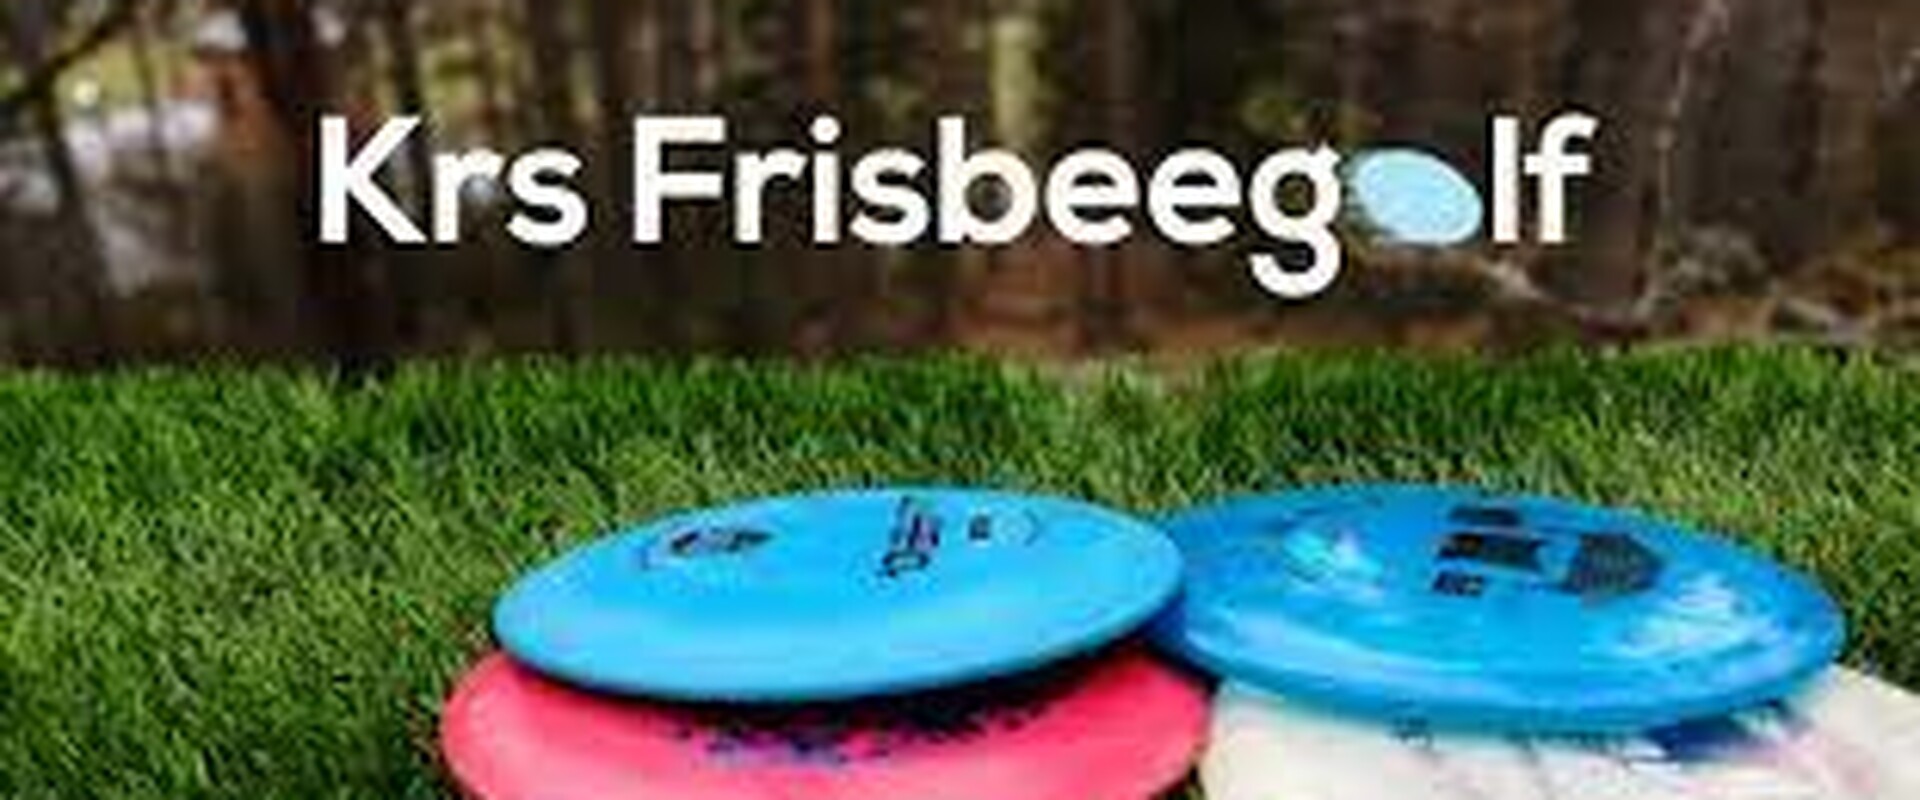 Frisbeegolf krs